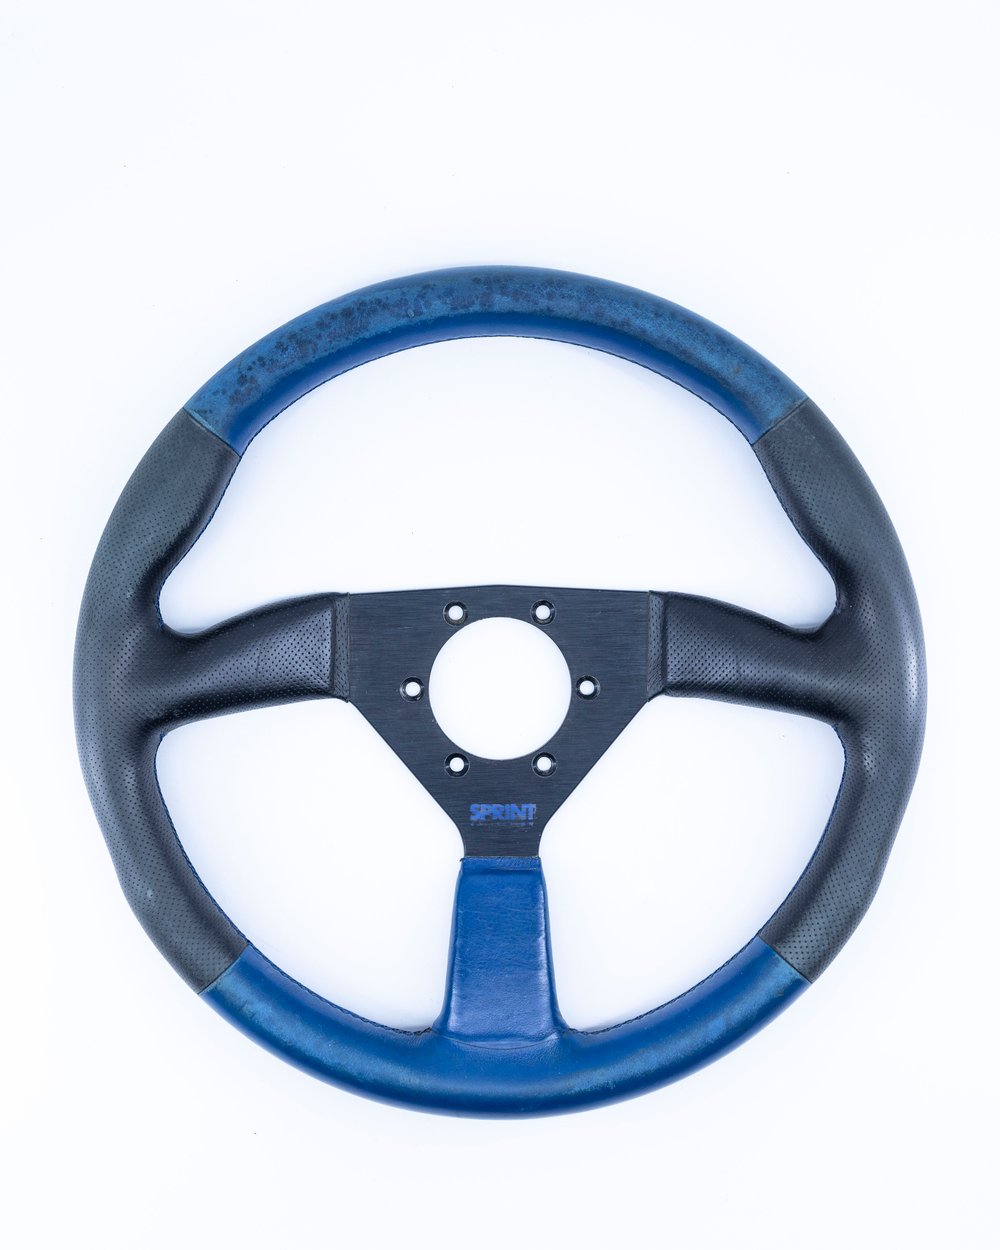 ATC Sprint Blue Steering Wheel (350mm)